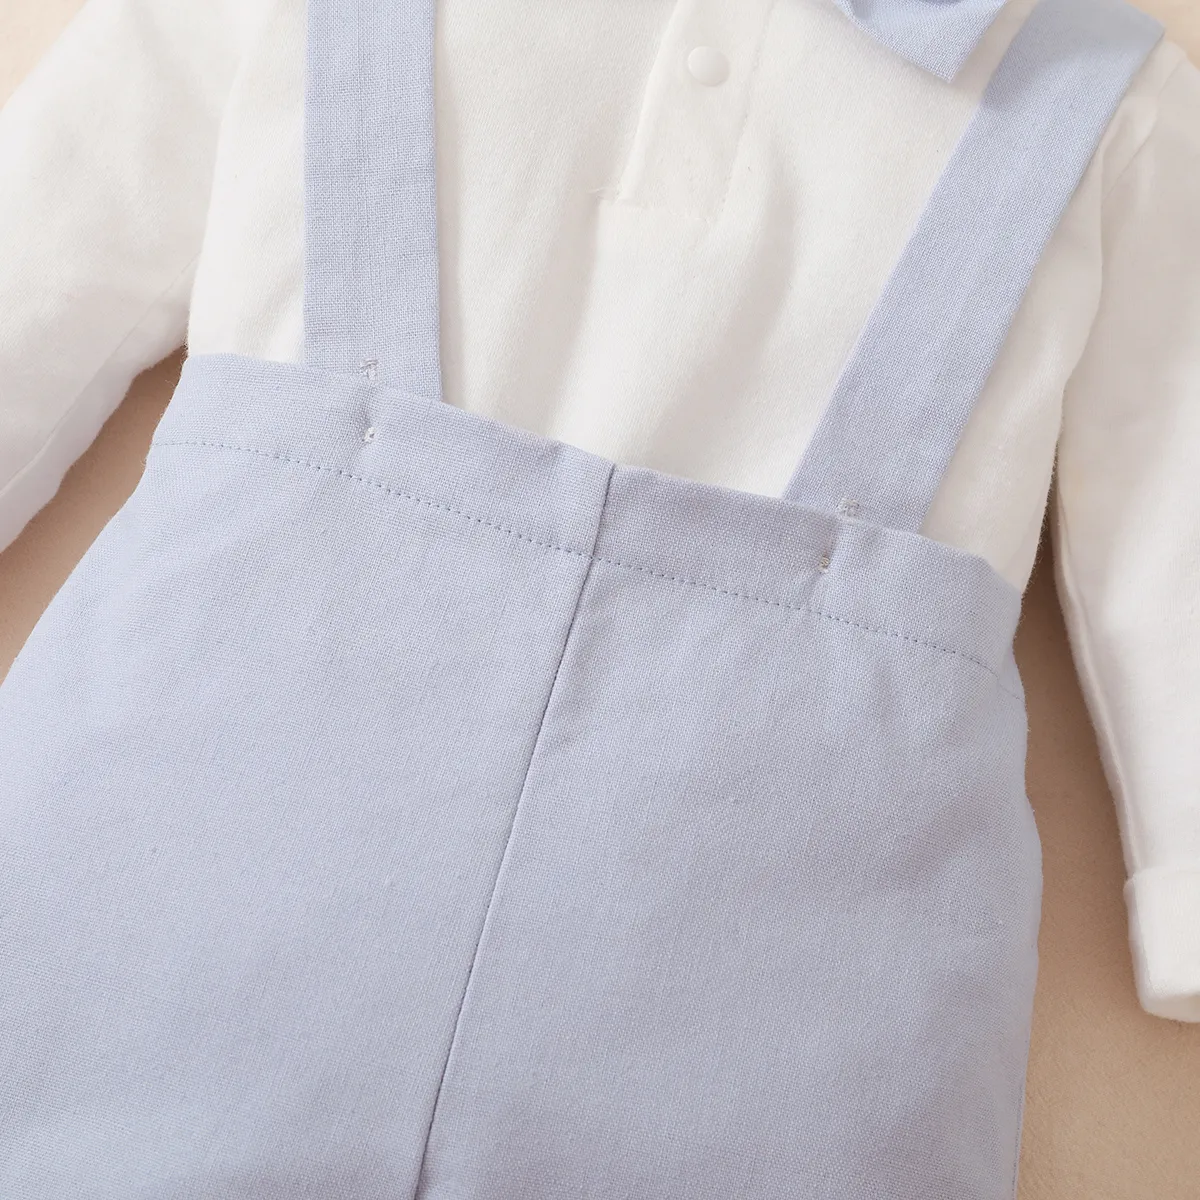 2pcs Baby Boy 95% Cotton Long-sleeve Gentleman Bow Tie Romper and Overalls Set Light Blue big image 1